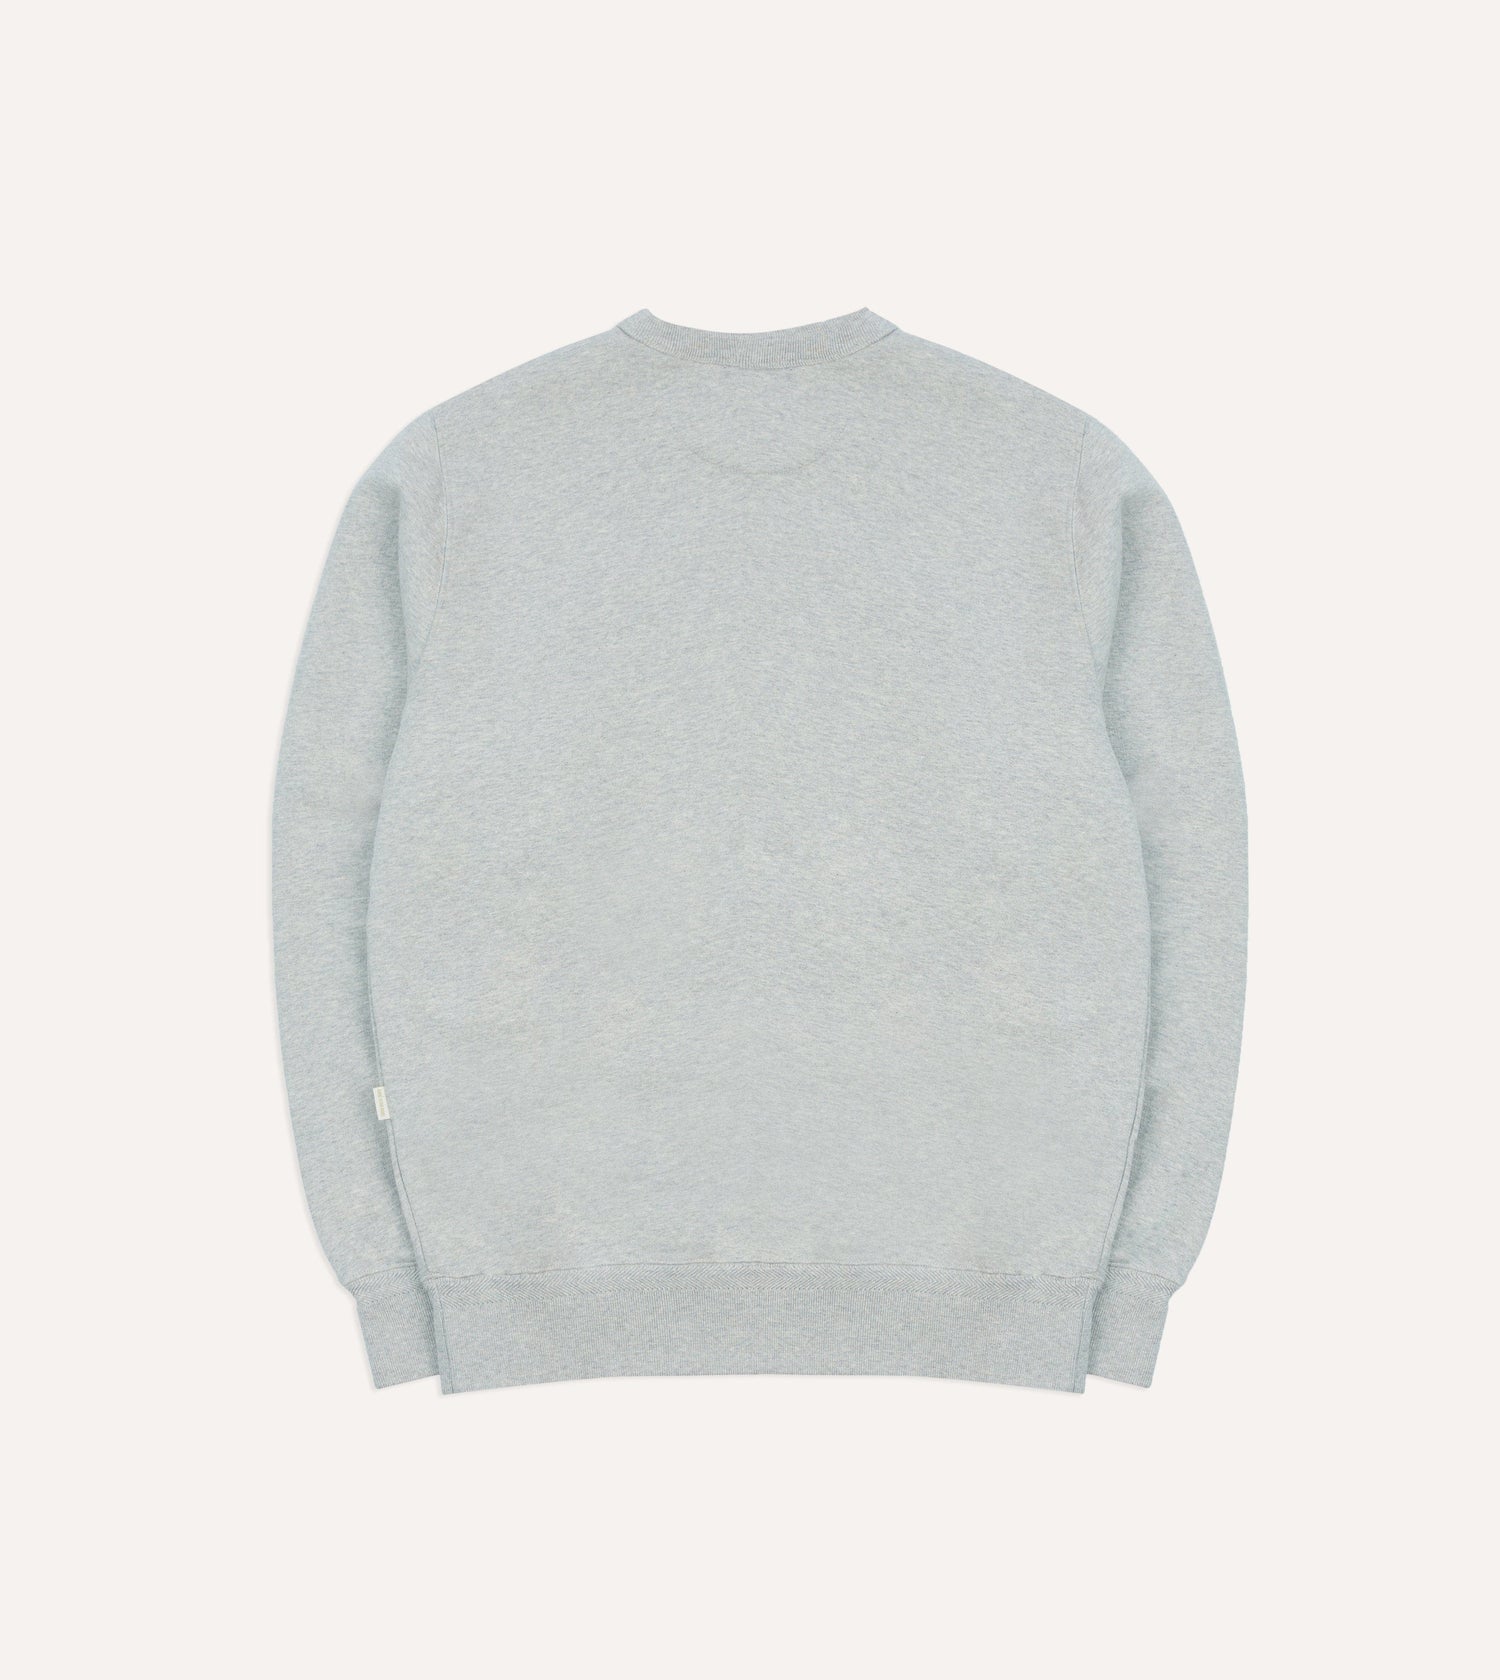 ALD / Drake's Grey Embossed Crewneck Sweatshirt